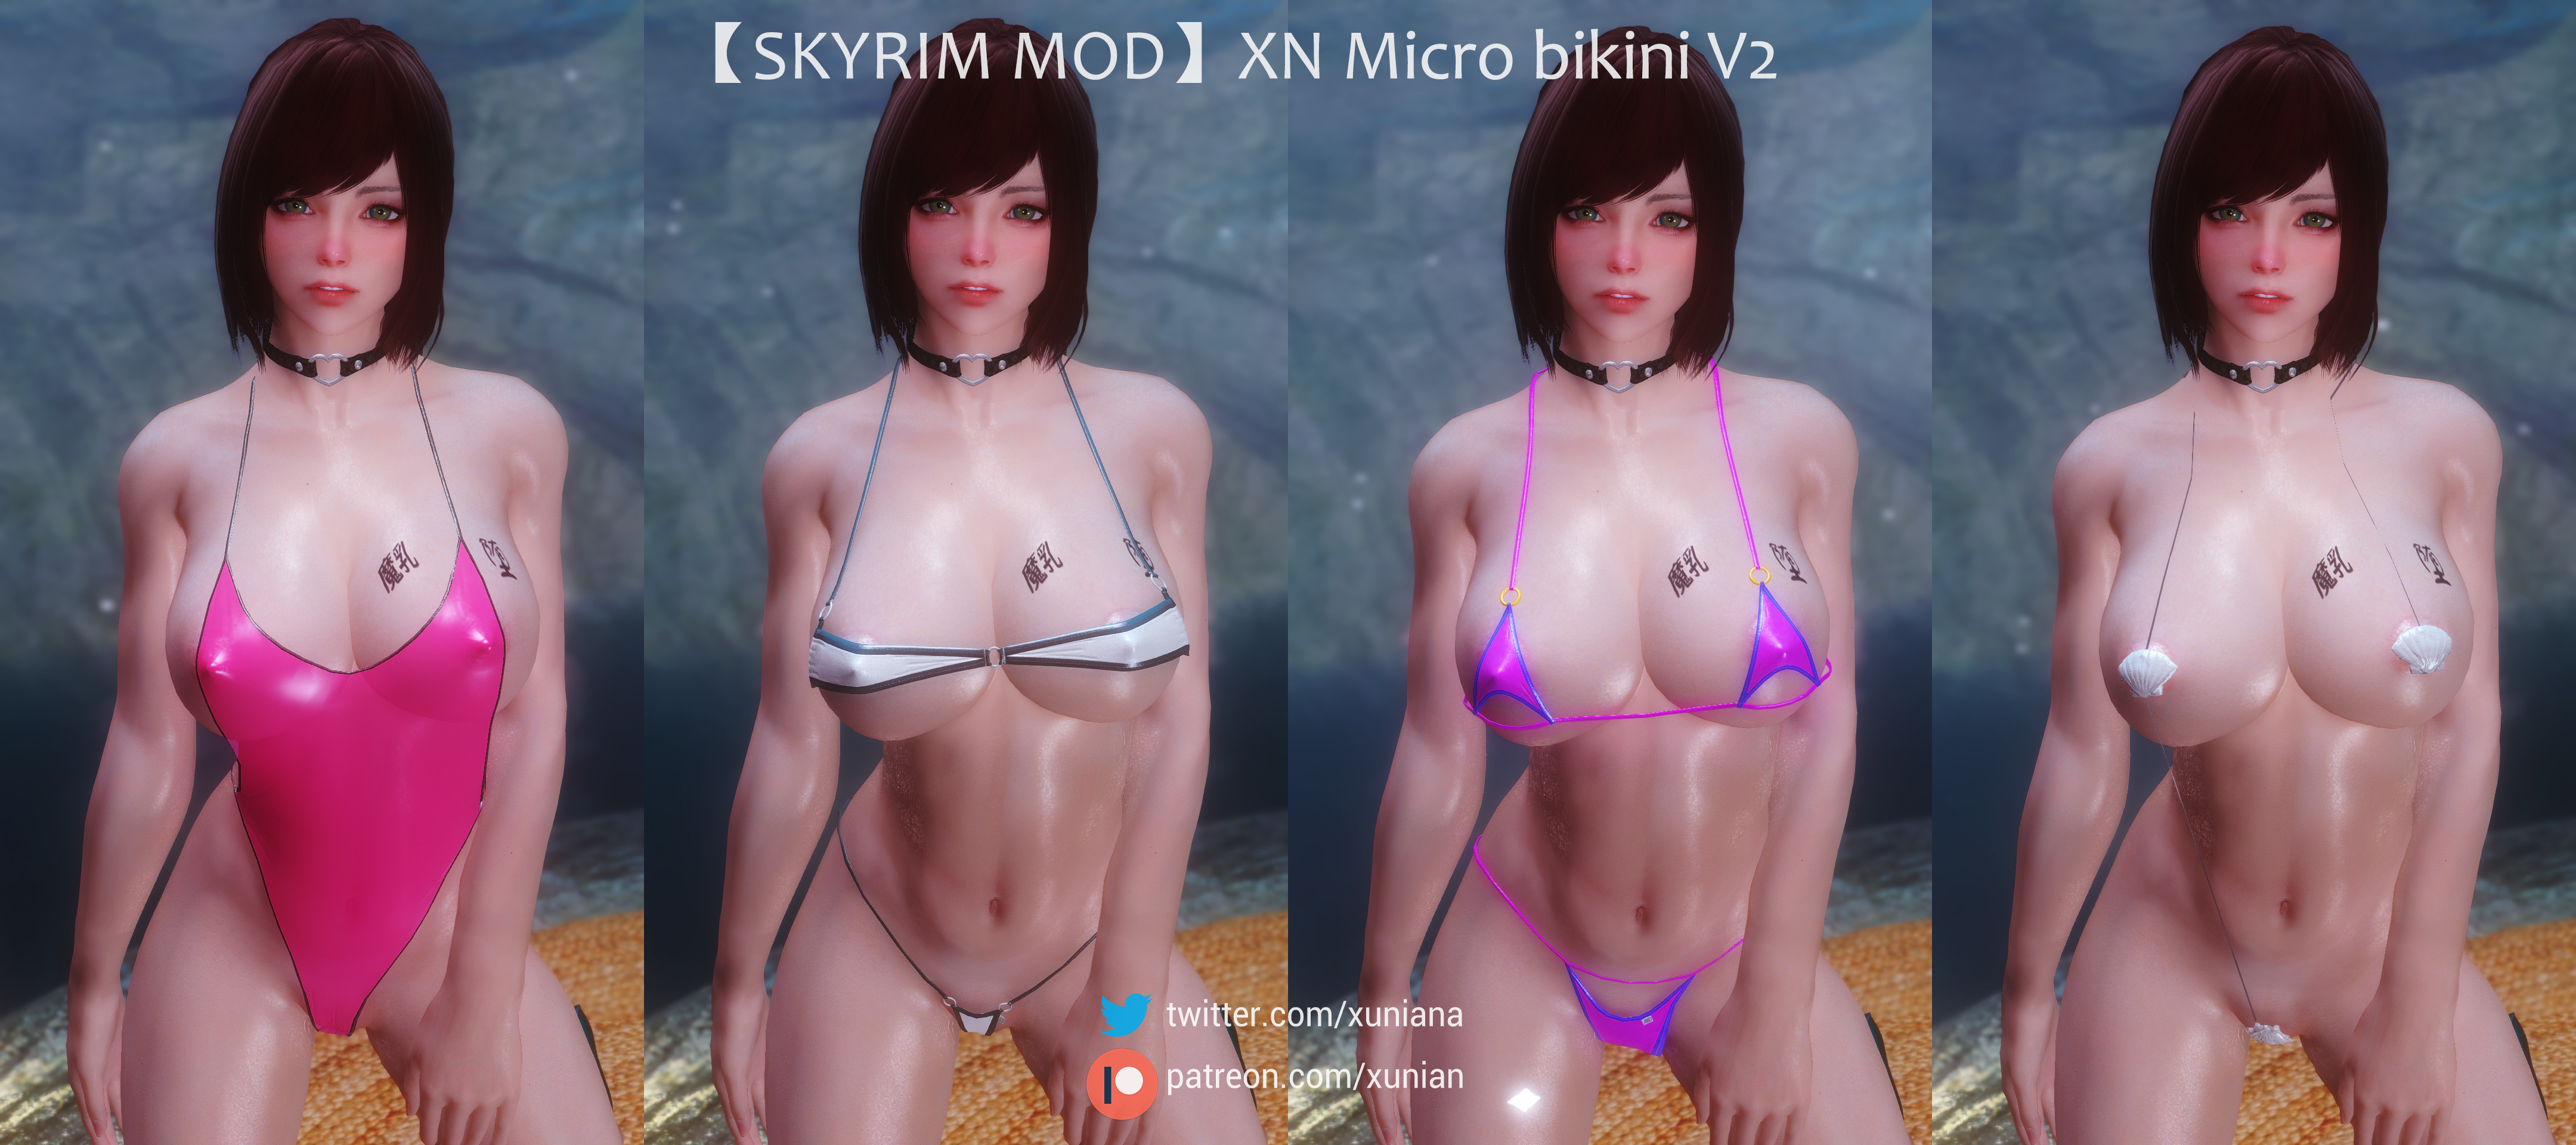 XN Micro bikini V2